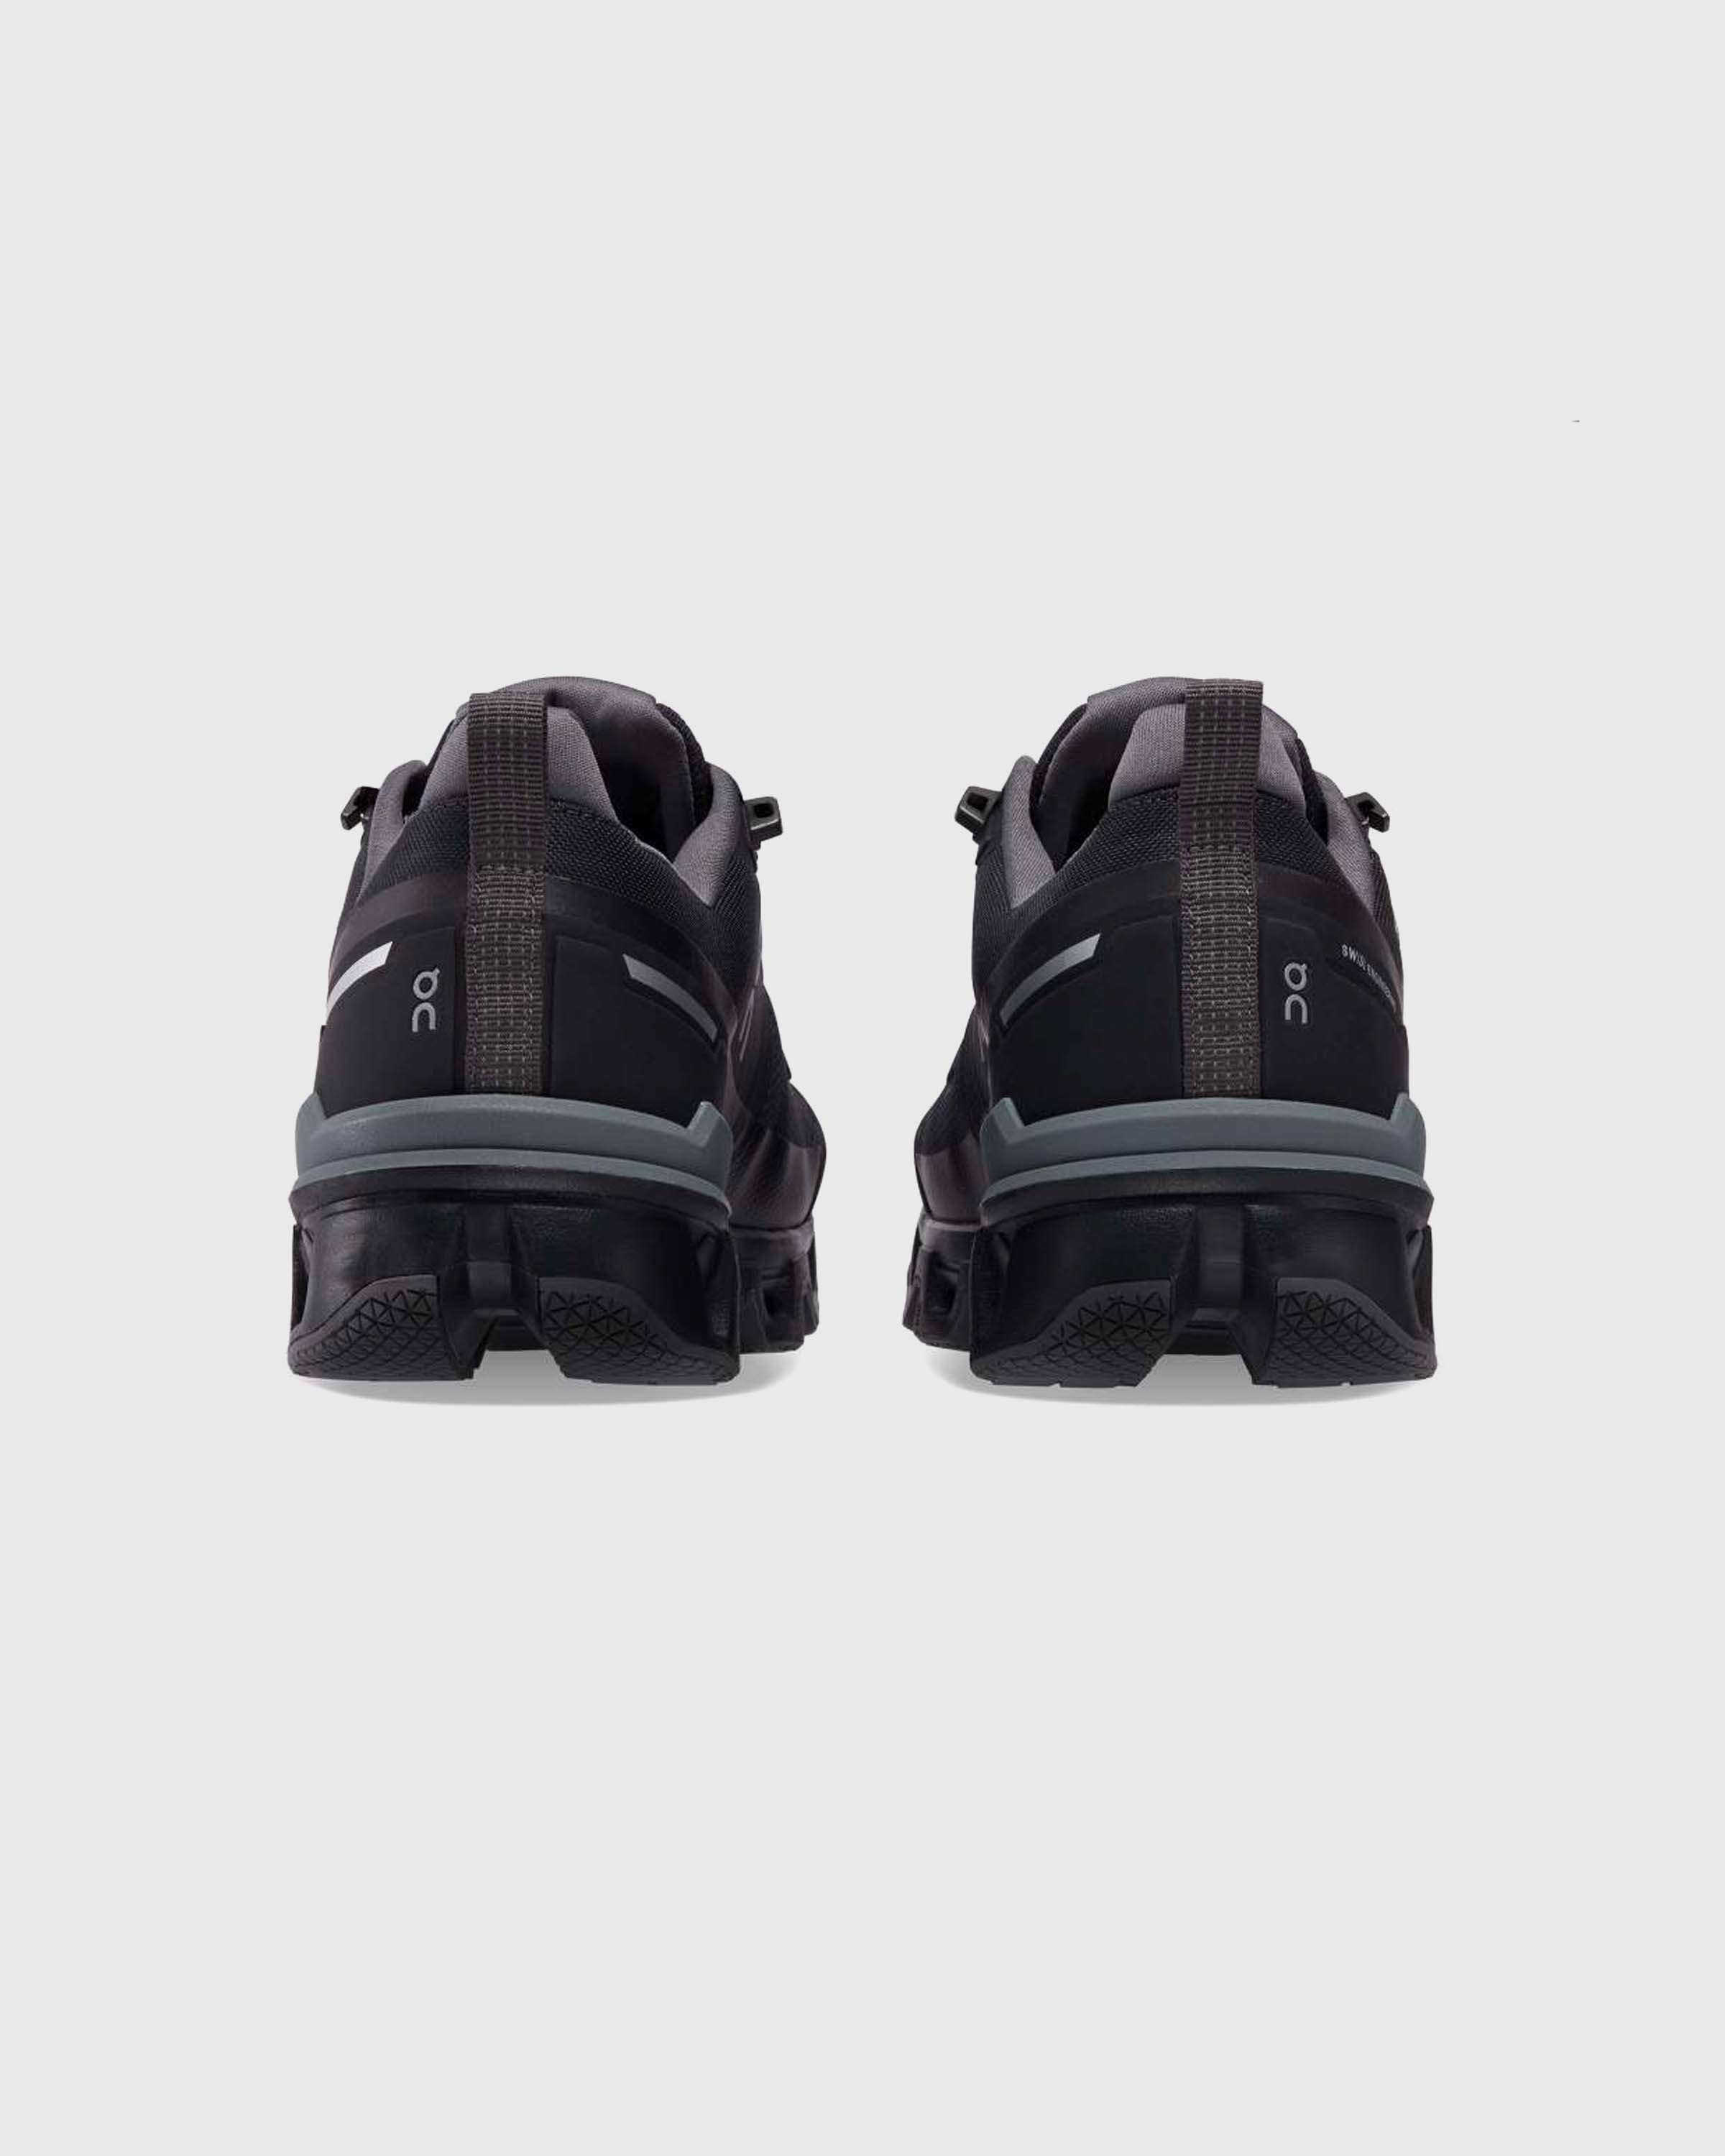 On - Cloudwander Waterproof Black/Eclipse - Footwear - Black - Image 5